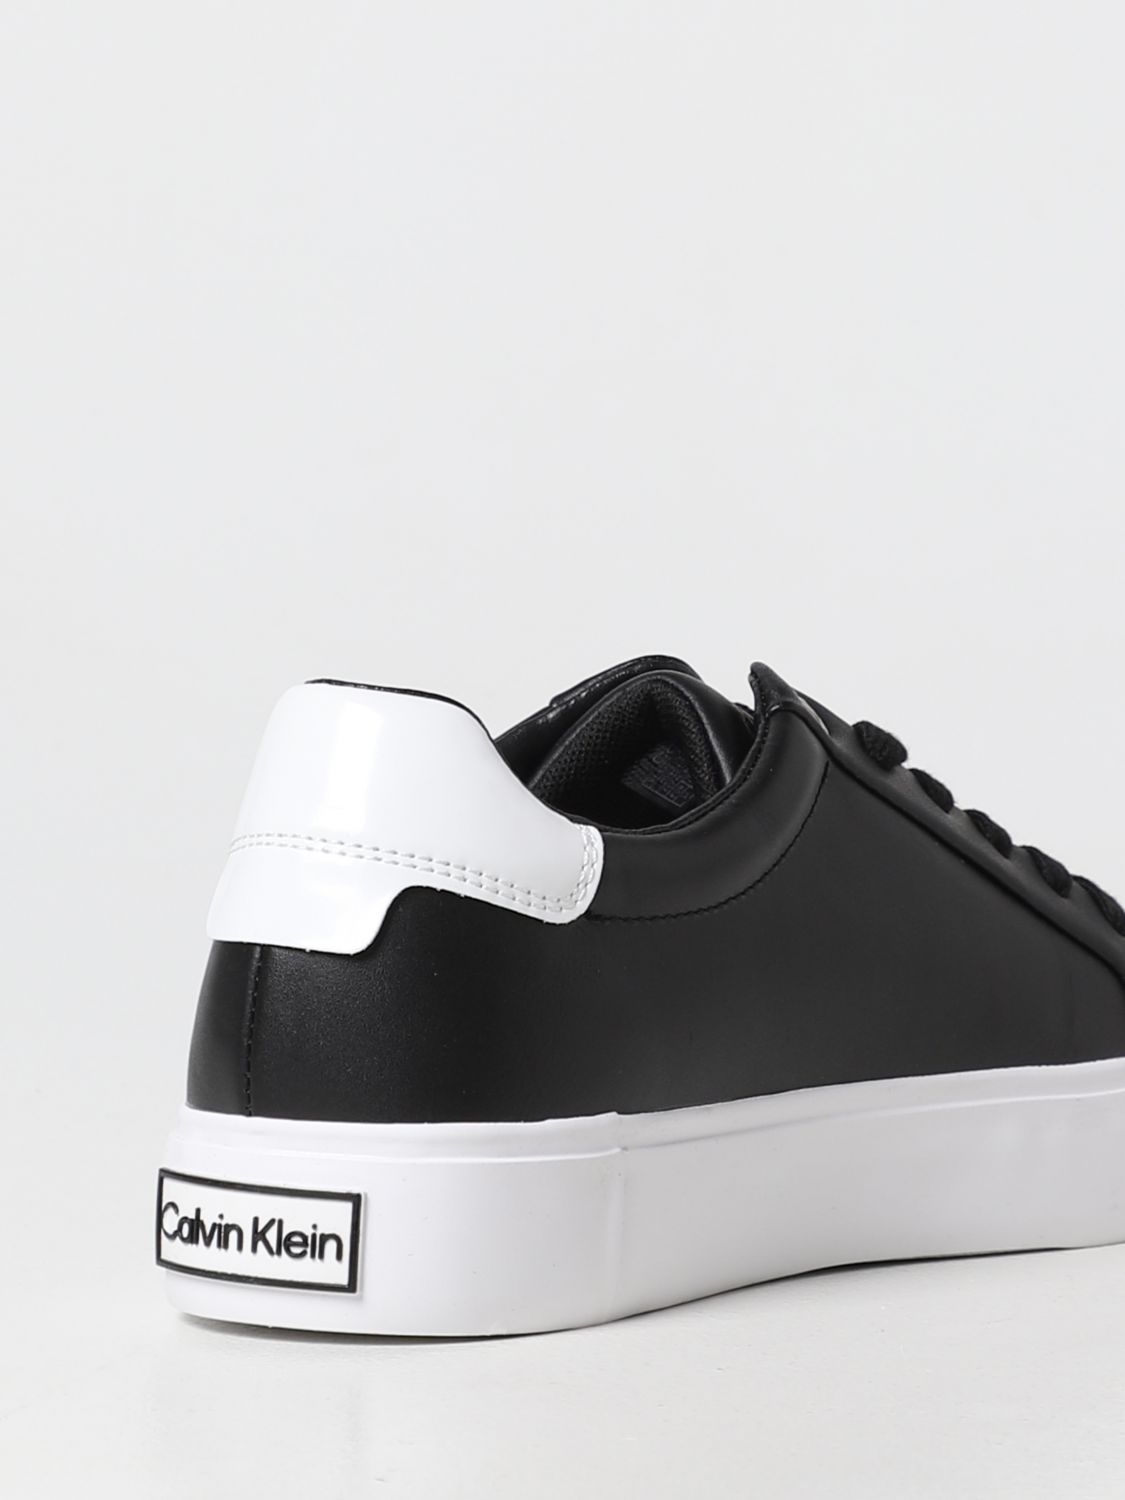 CALVIN KLEIN: woman - Black | Klein sneakers HW0HW01406 online on GIGLIO.COM